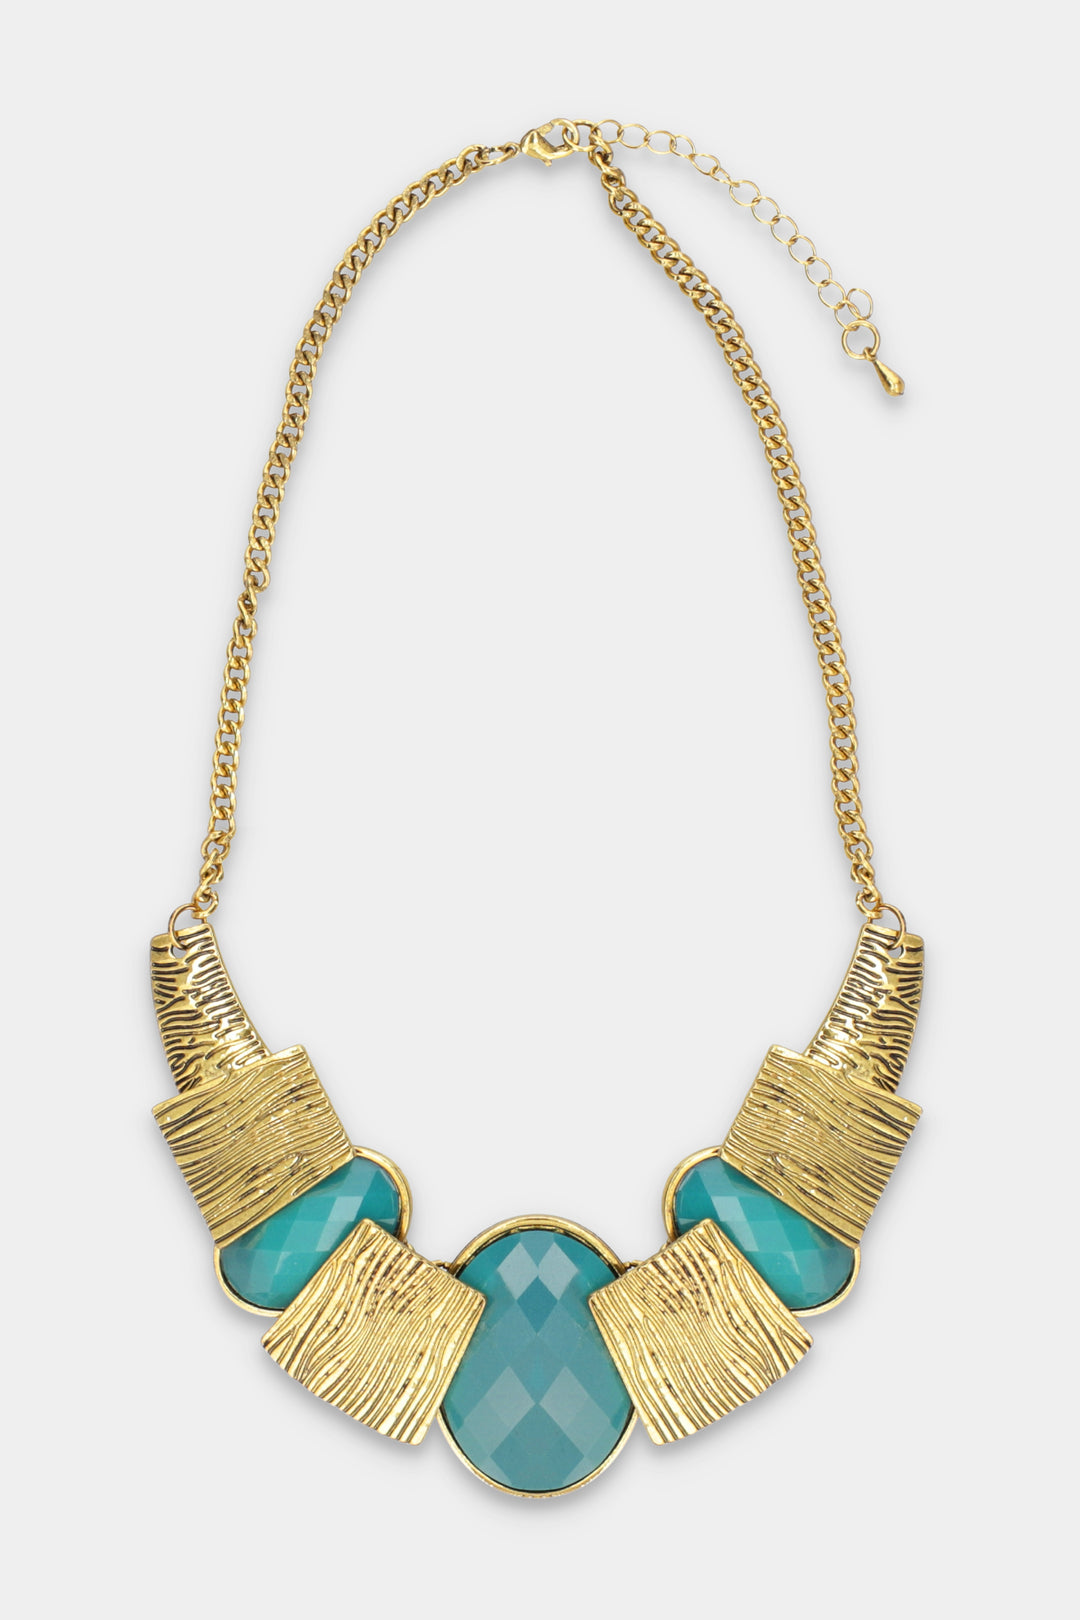 Dainty Turquoise Necklace - W21 - WJW0018